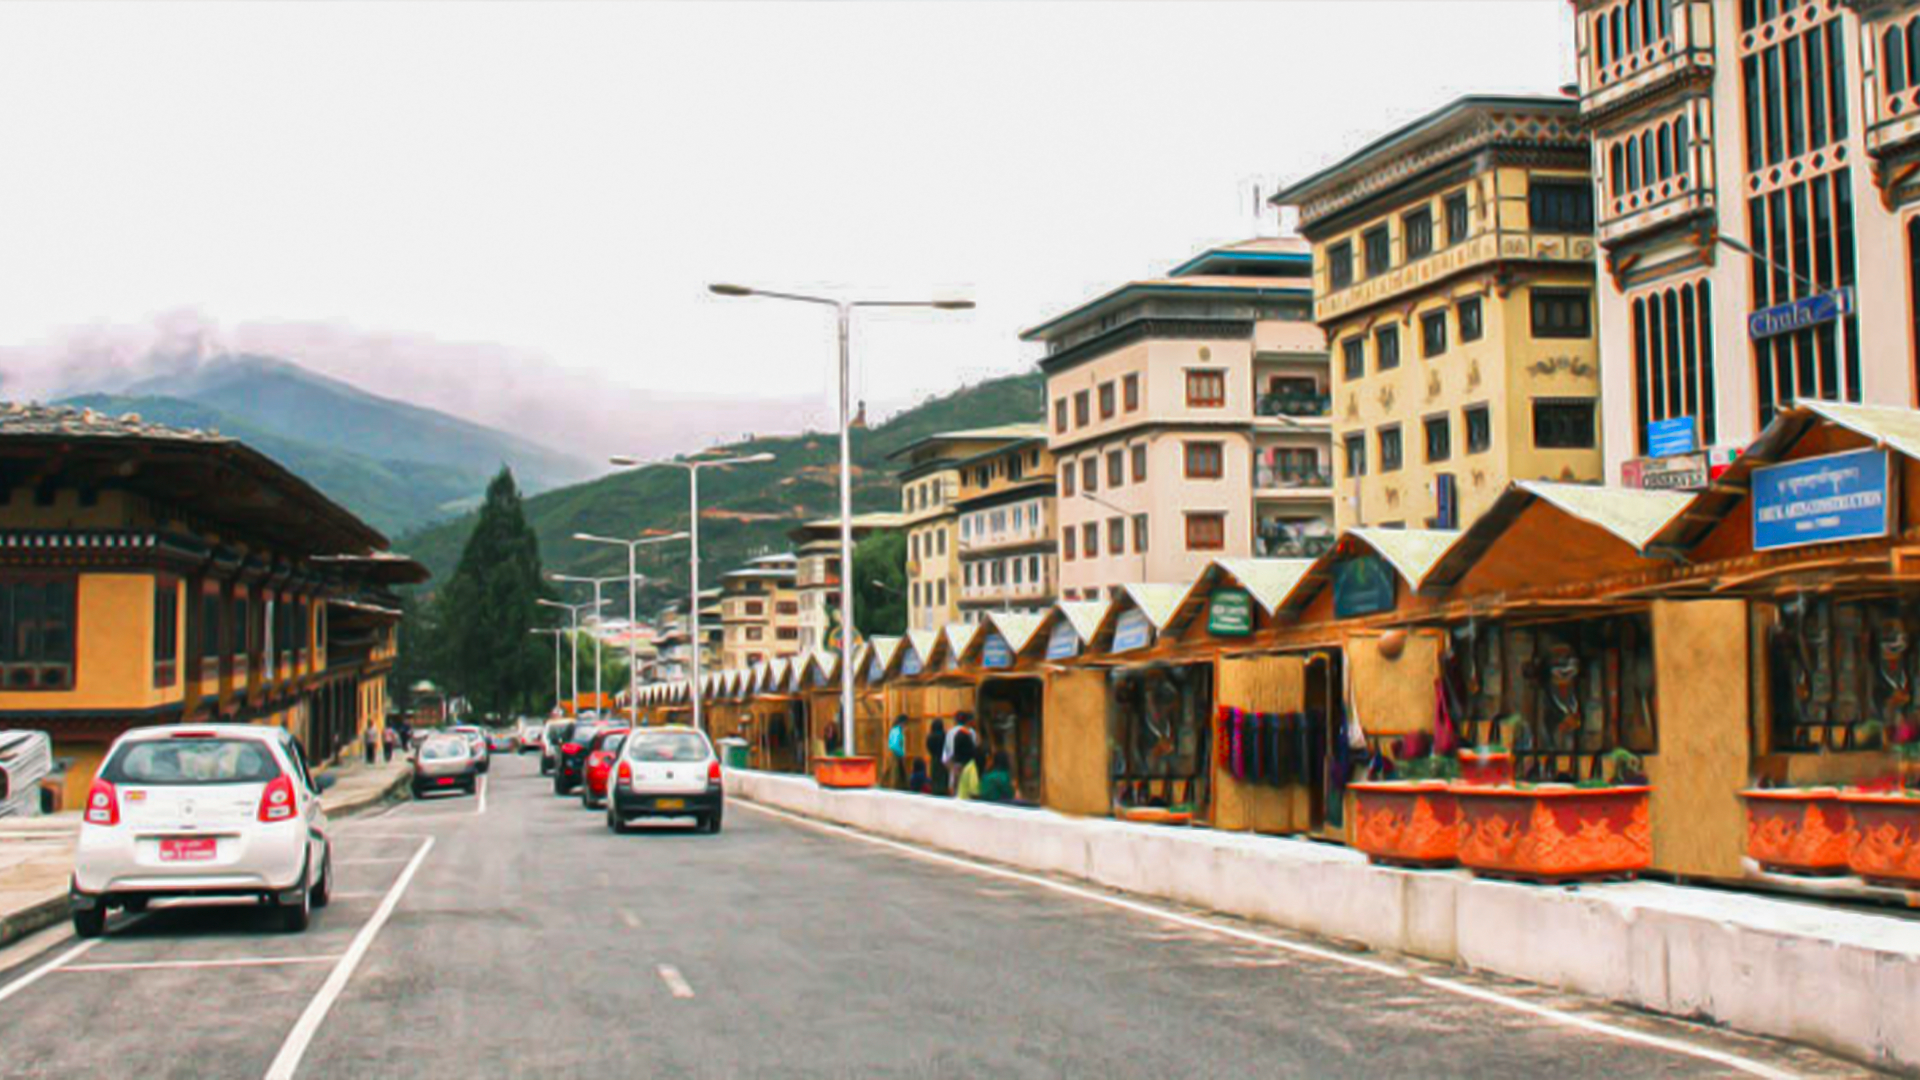 Marry in Bhutan Tours - Get Married in Bhutan | HeavenlyBhutan